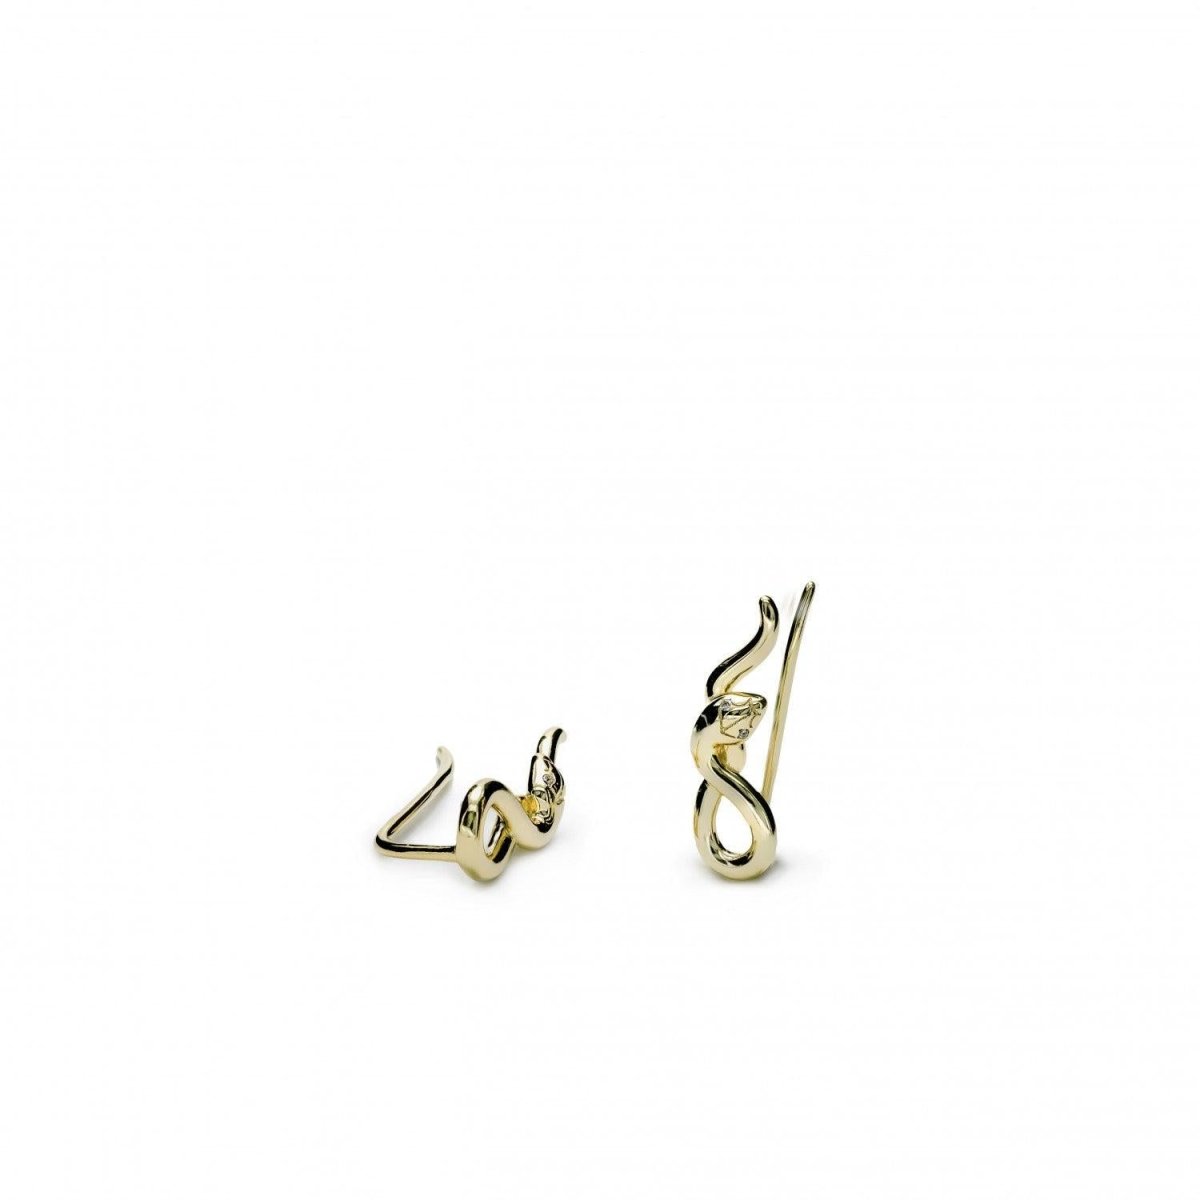 Earrings - Gold-plated snake motif climbing earrings